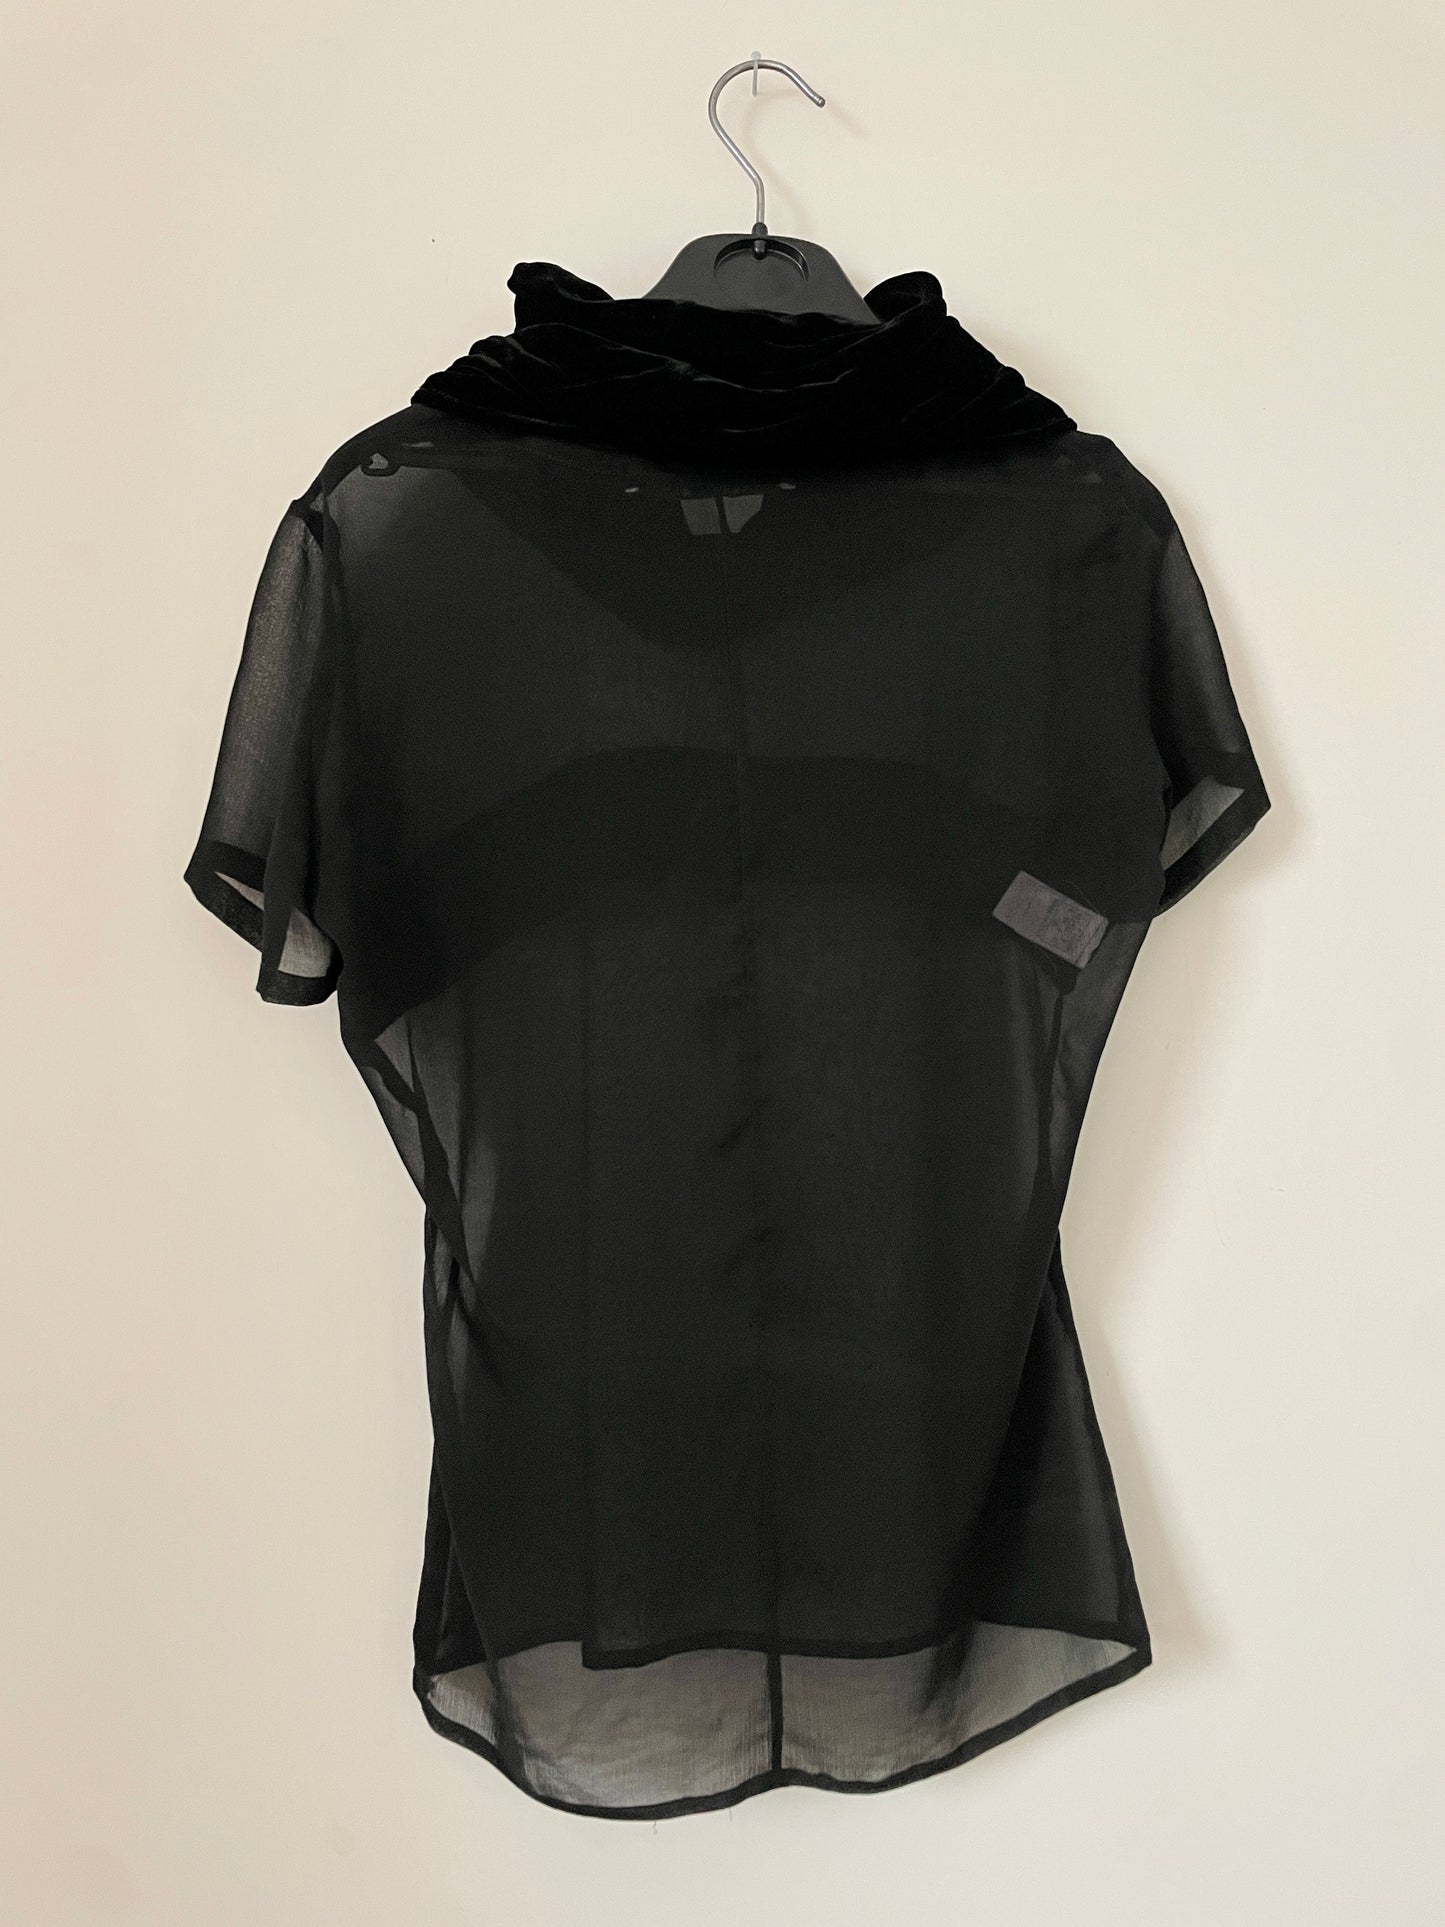 Lawrence Steele 90's silk and velvet black top